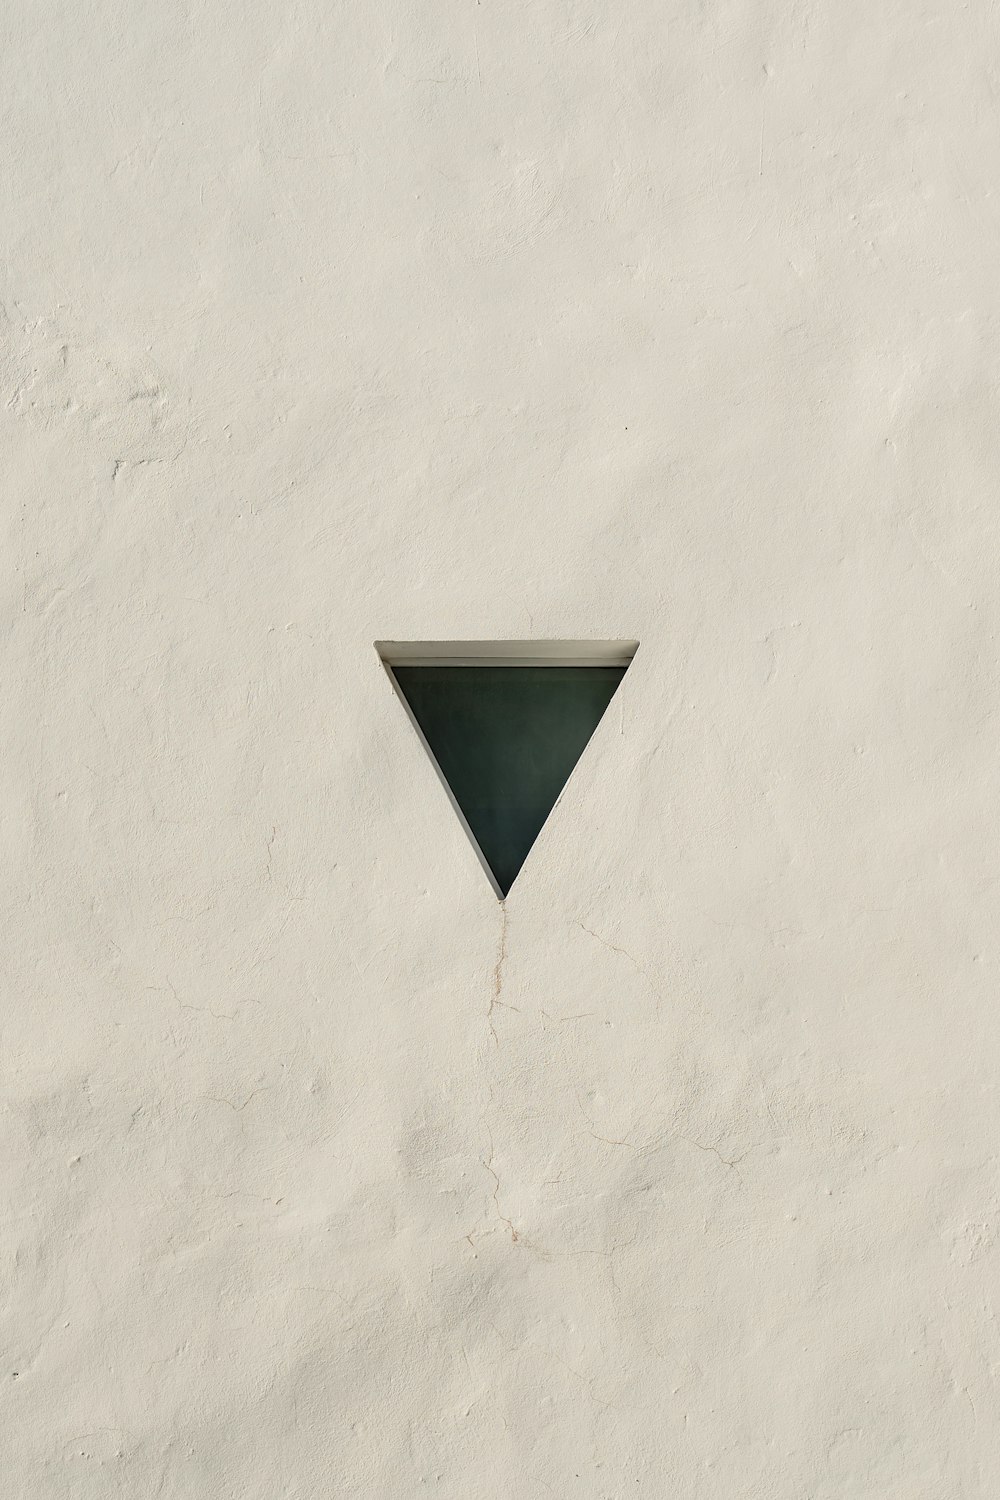 a white wall with a triangle shaped window